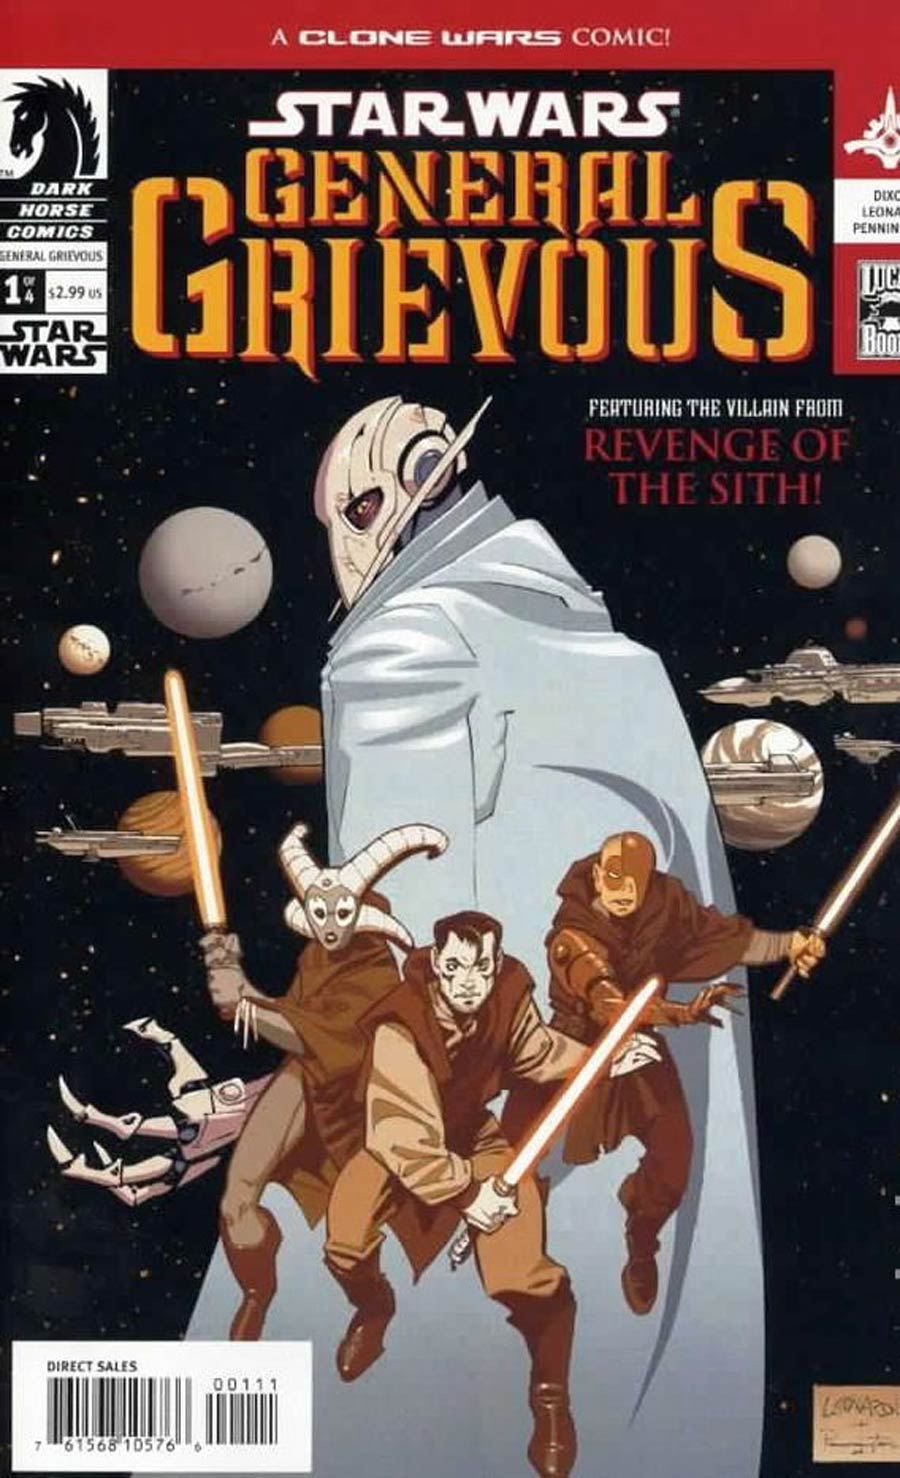 Star Wars General Grievous #1